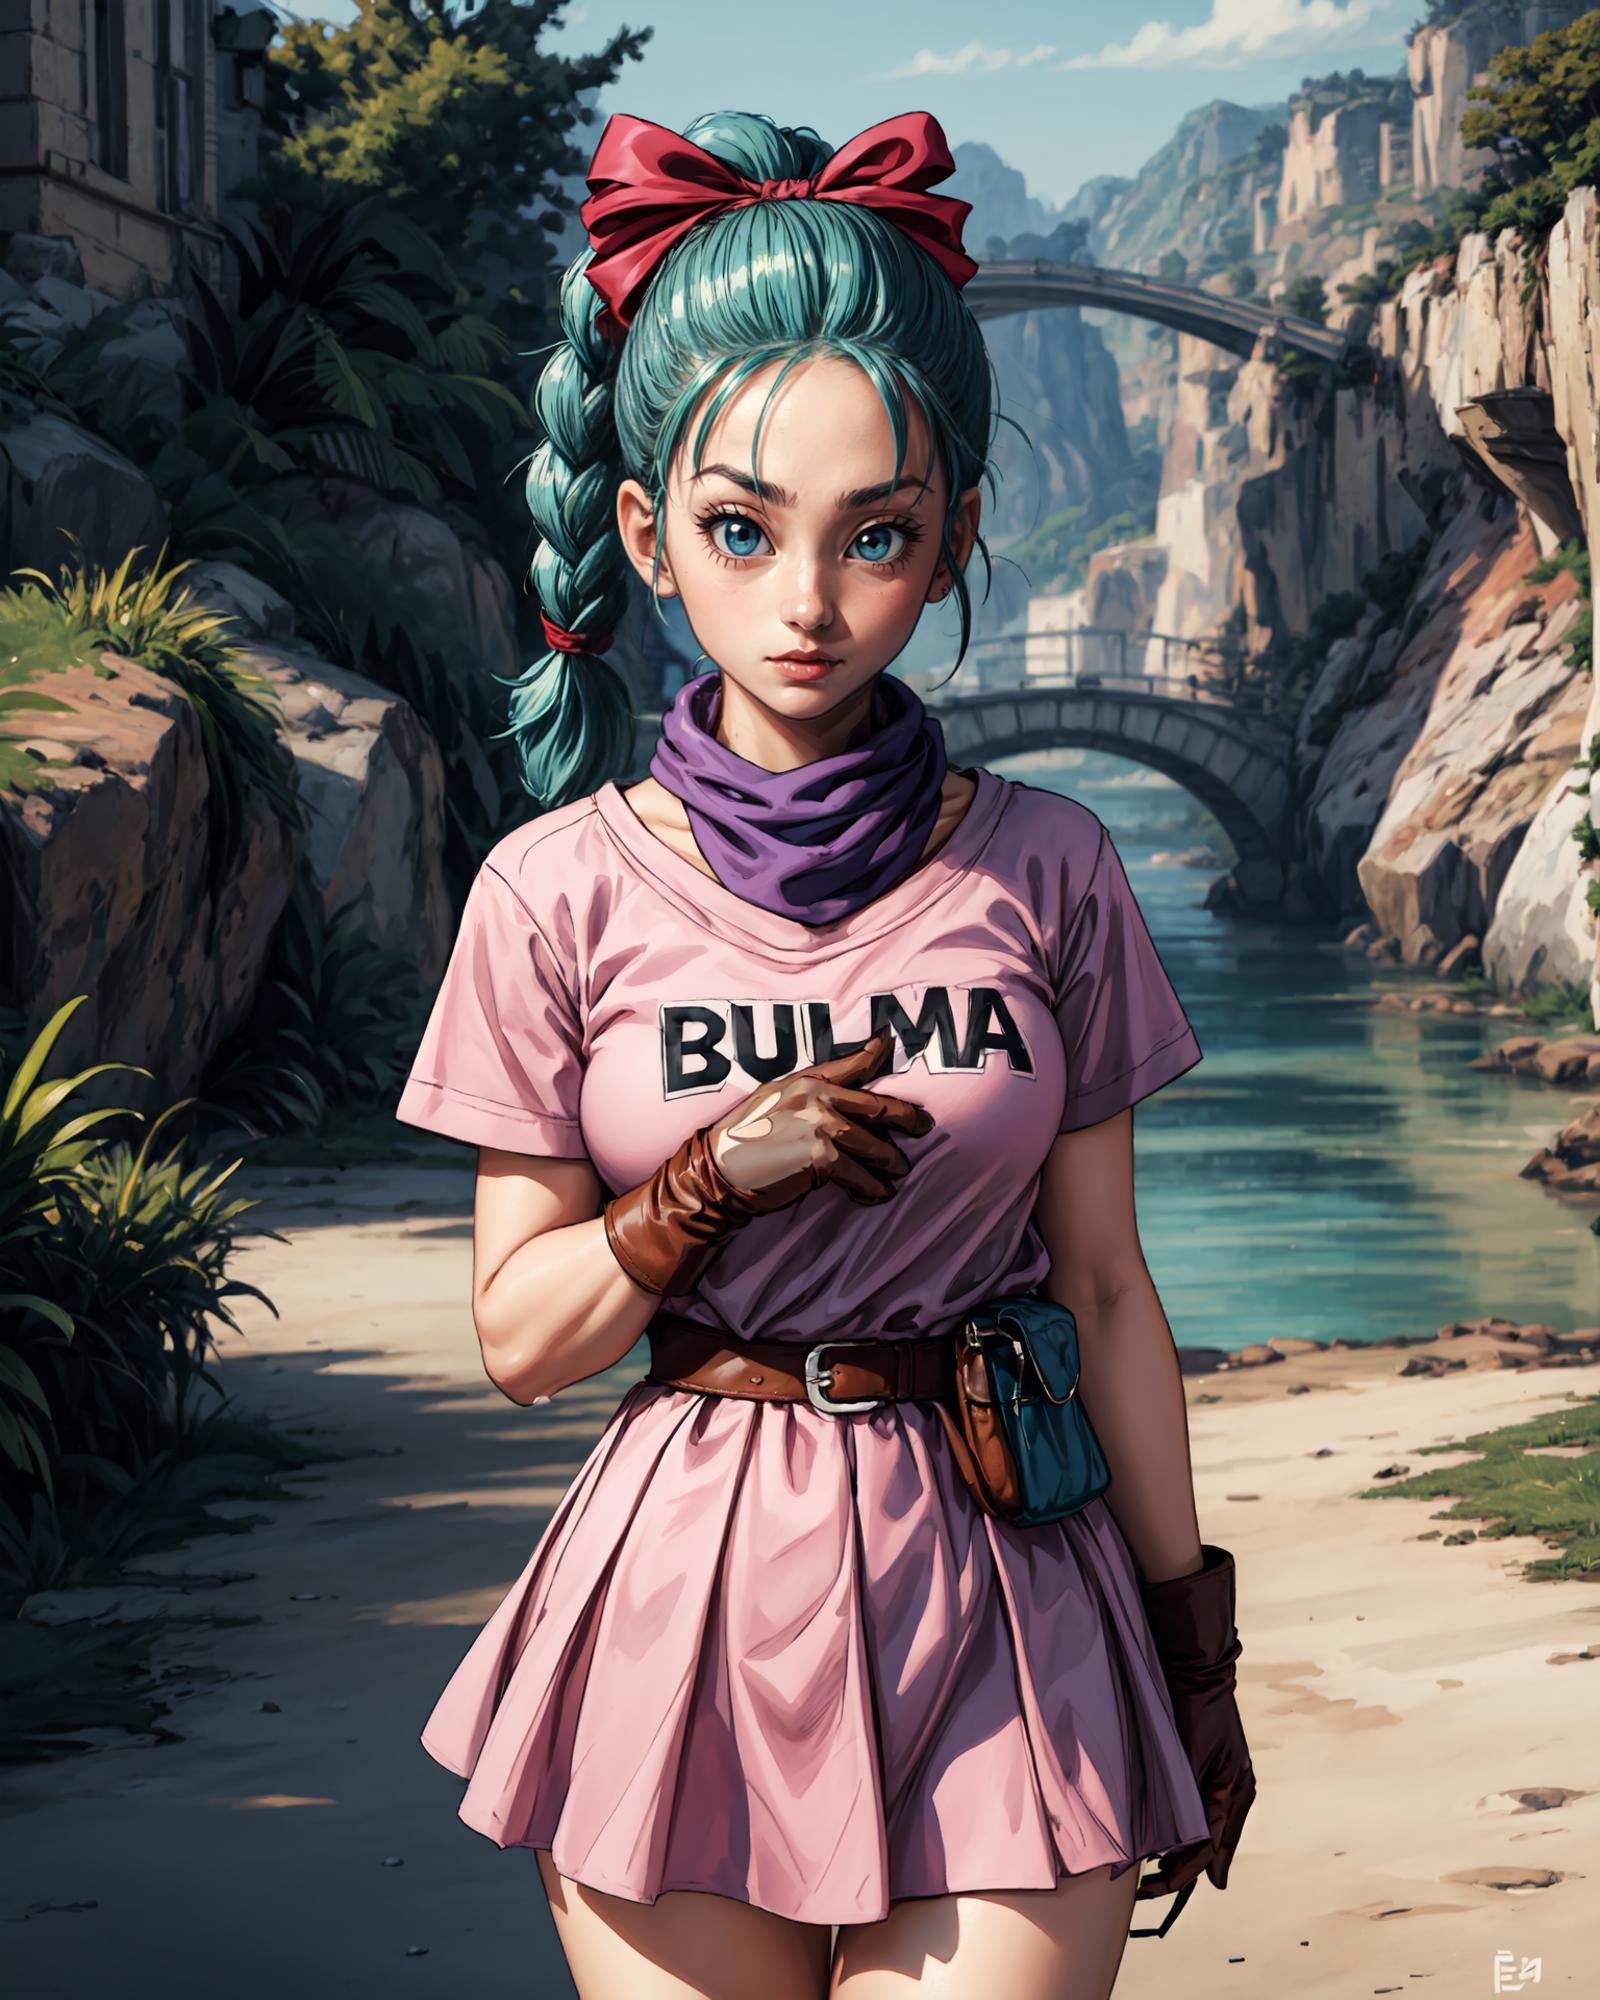 Bulma ブルマ / Dragon Ball image by AiBaVi